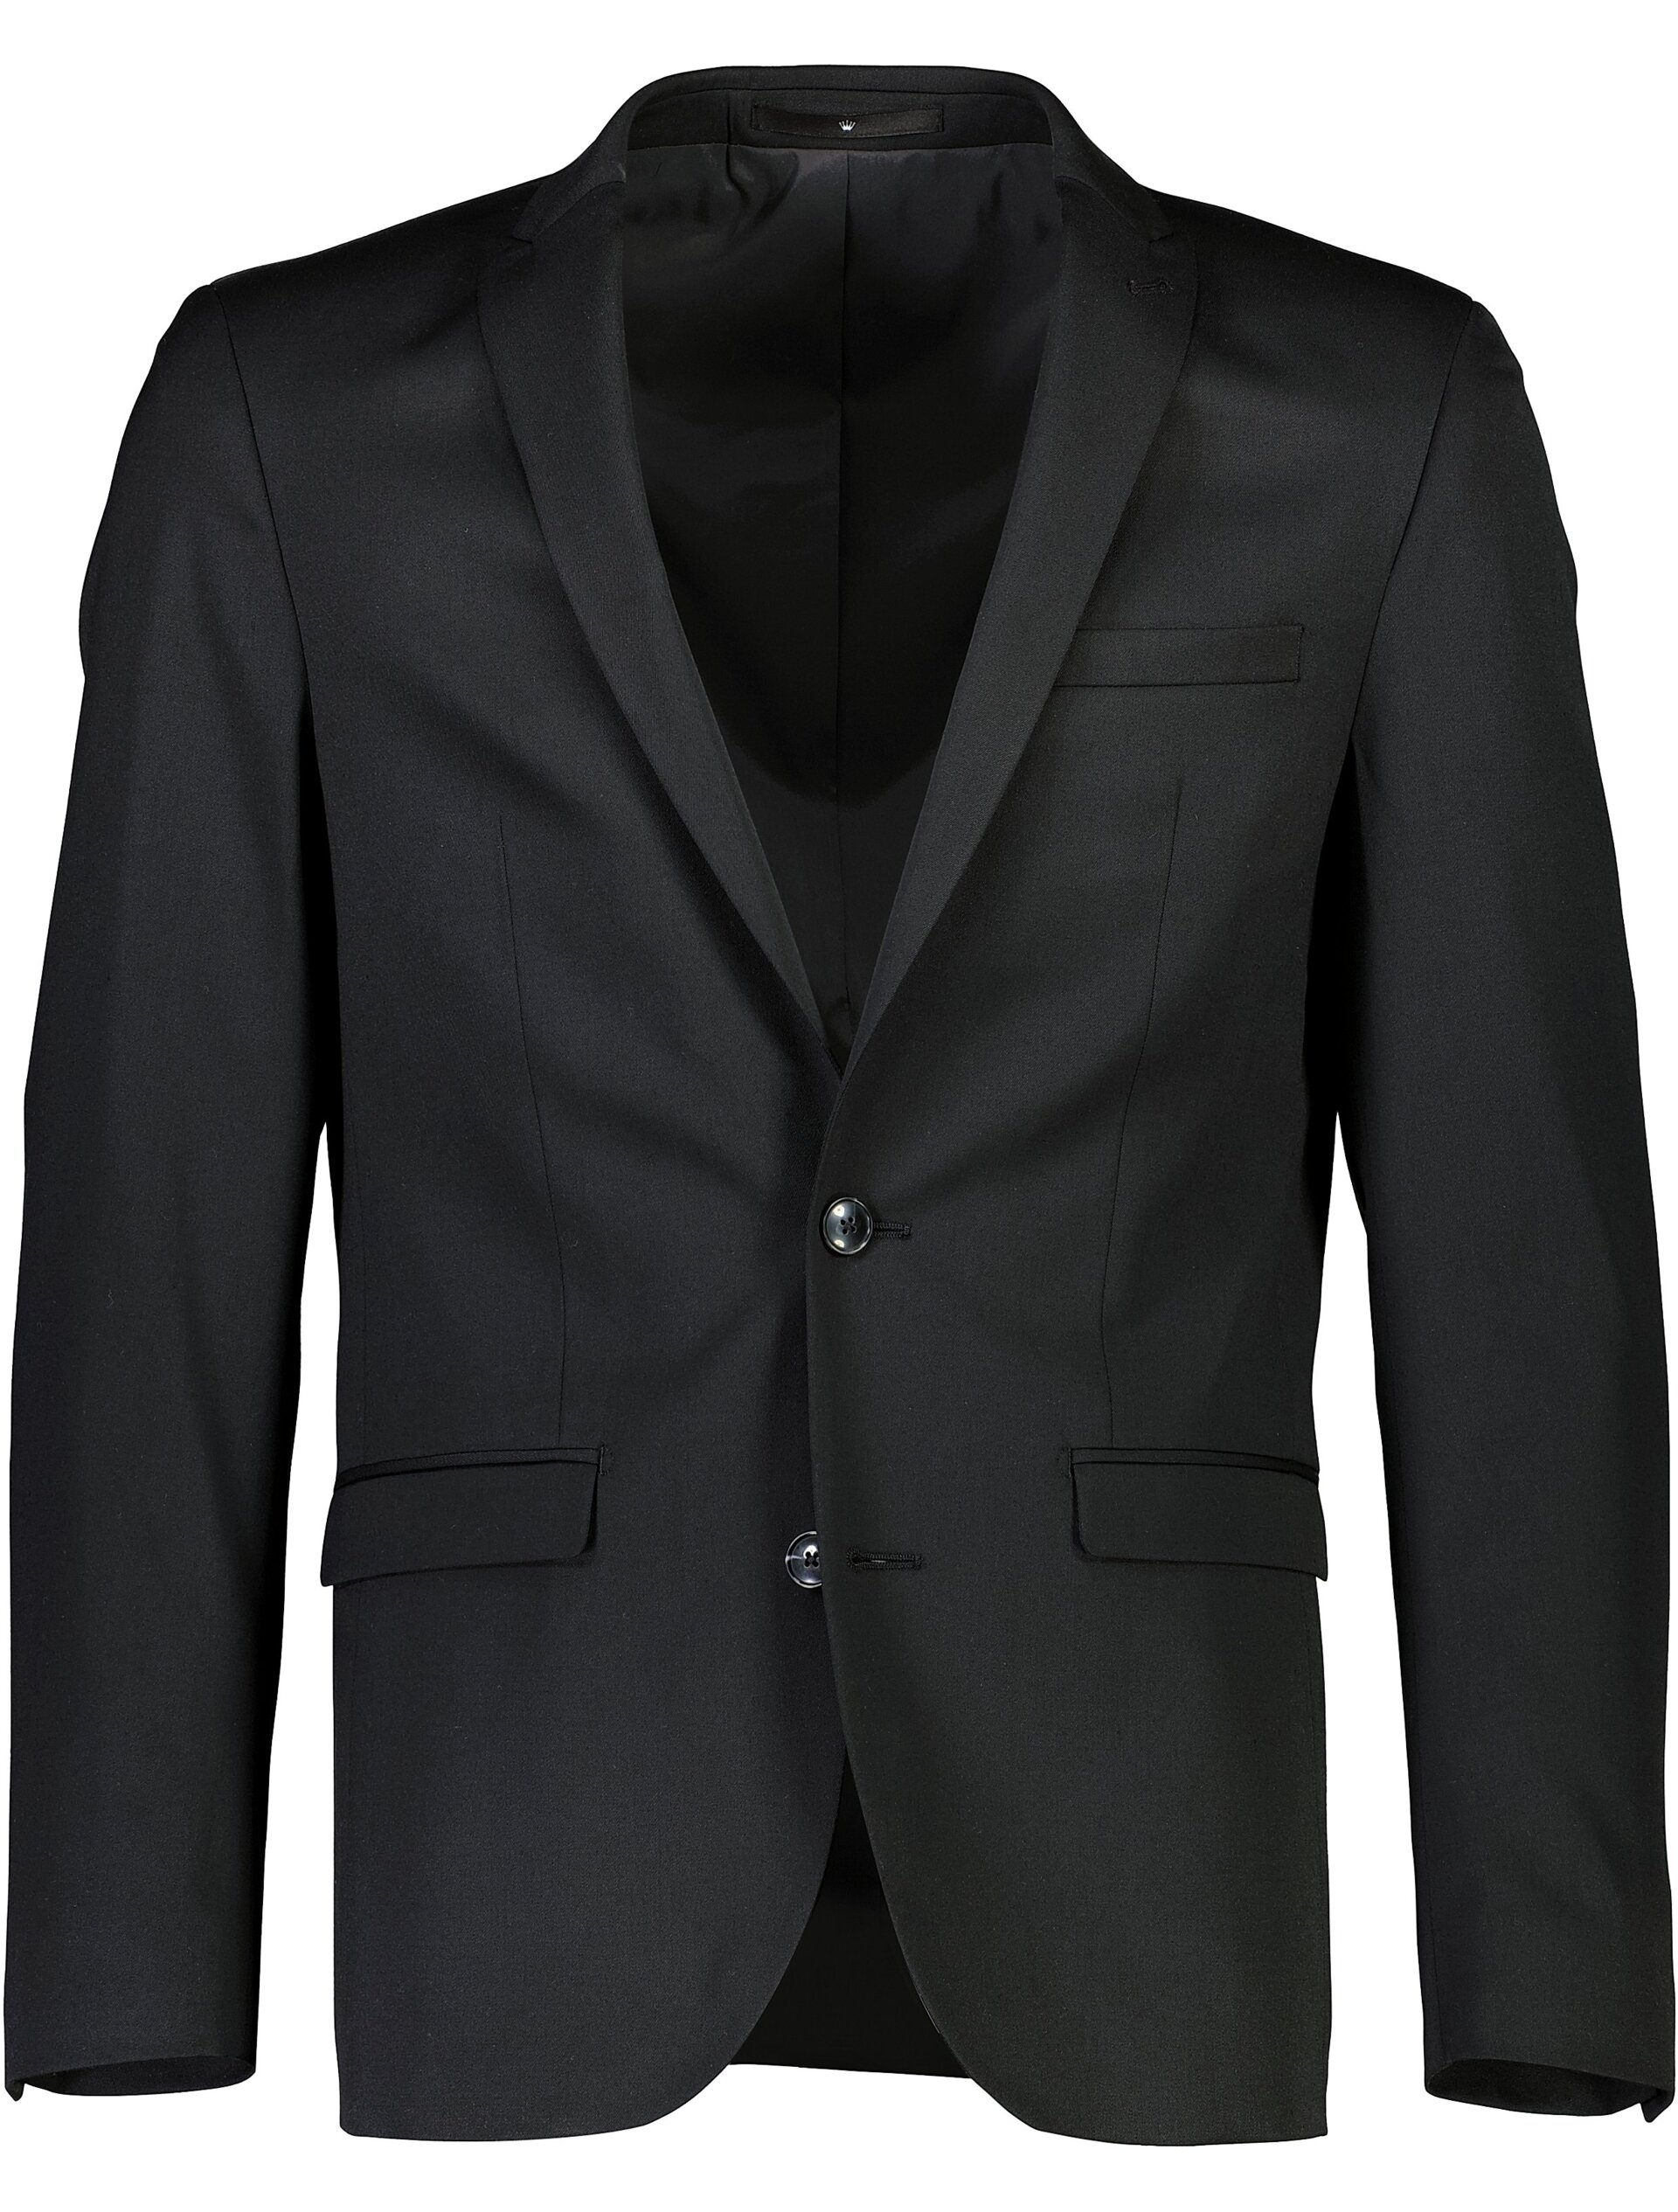 Junk de Luxe Suit jacket black / black